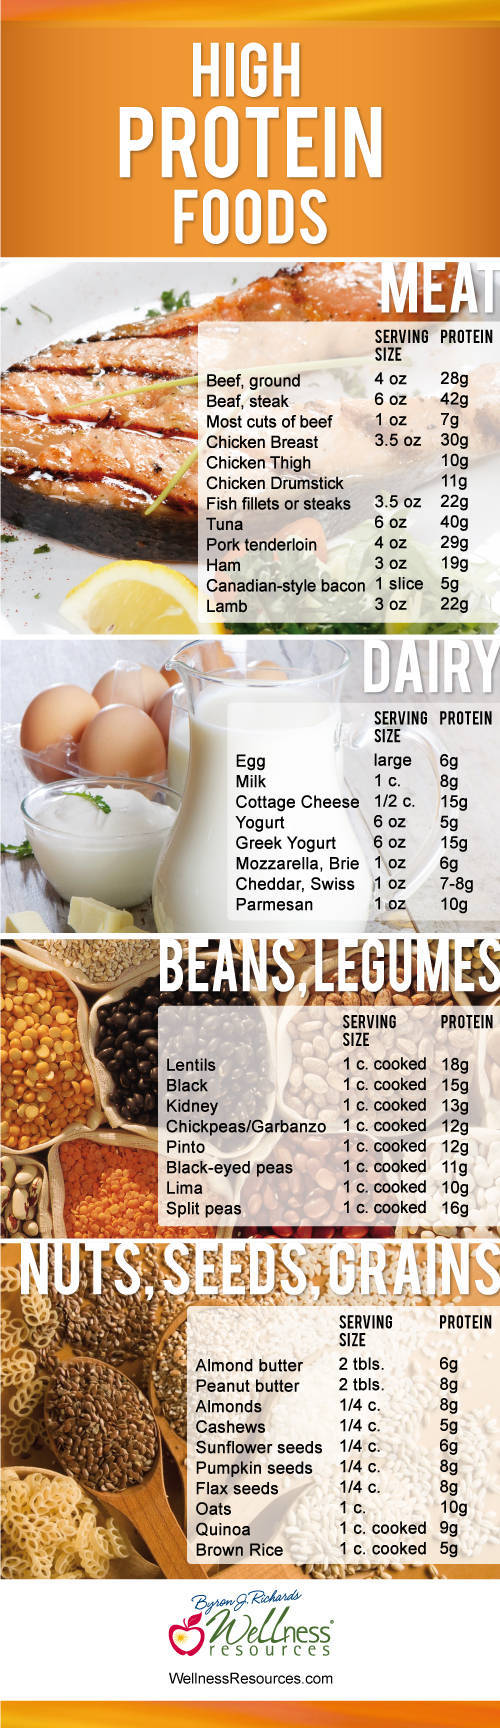 list-of-foods-high-in-protein.jpg